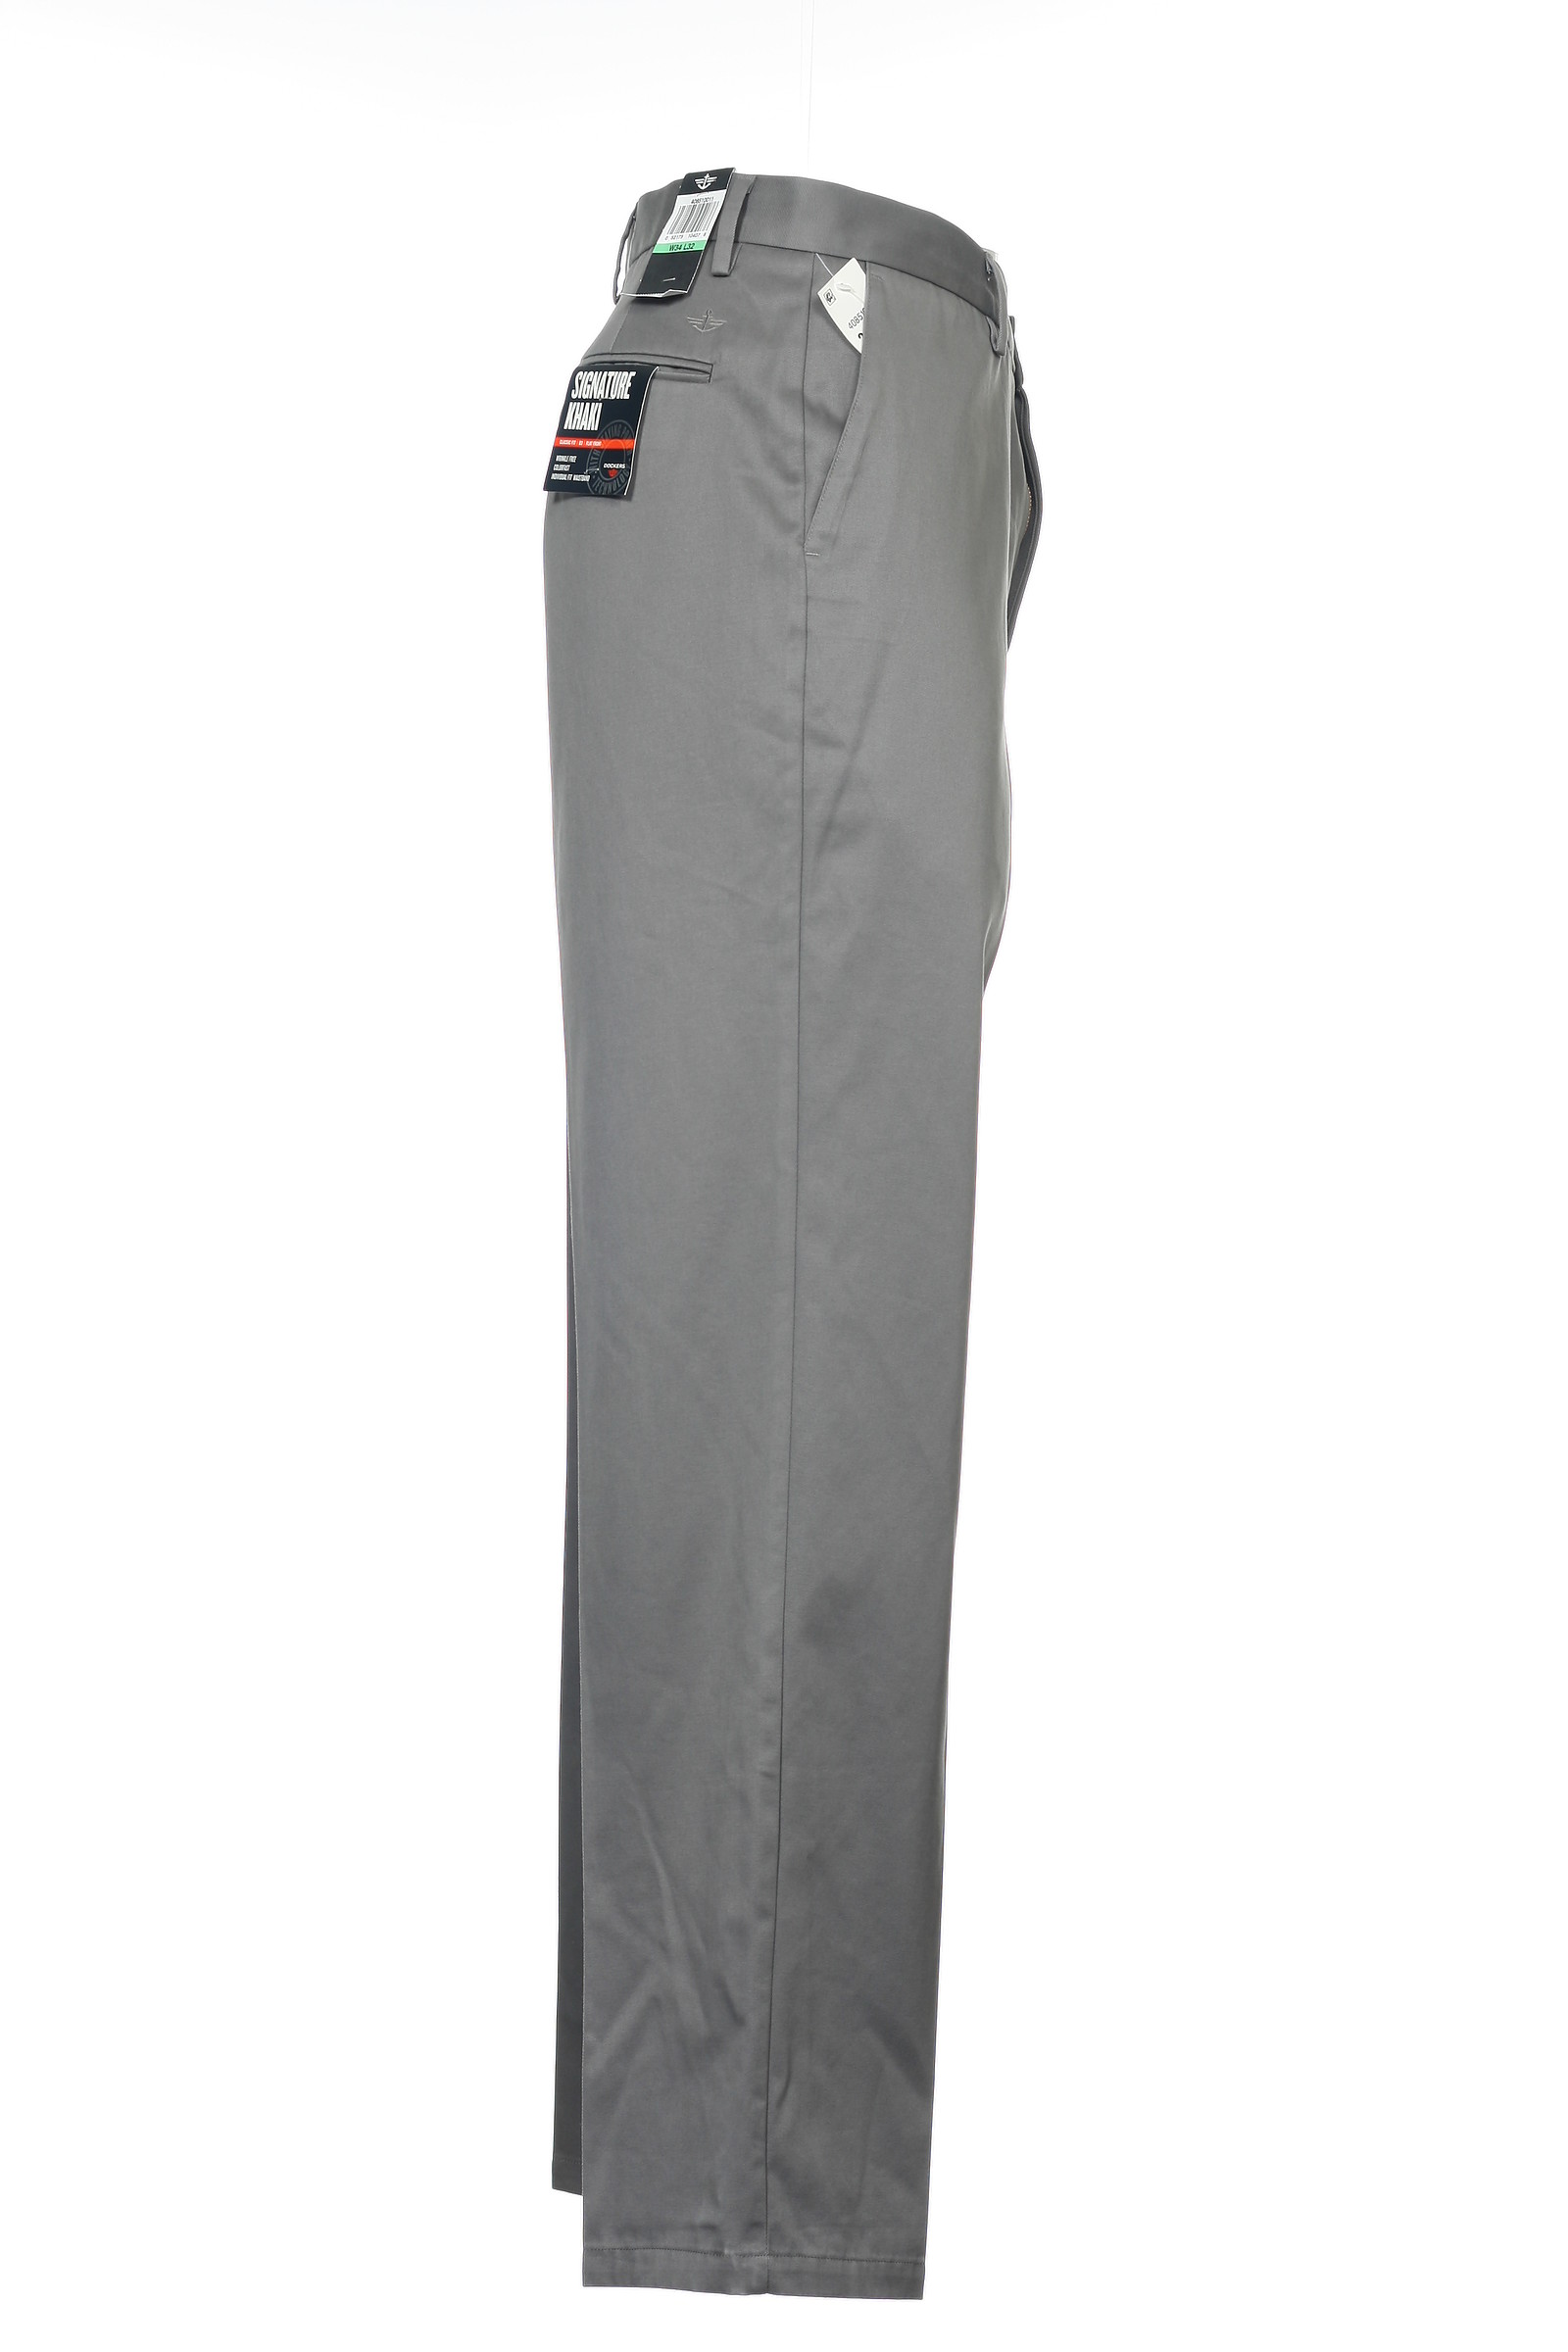 Dockers 'Signature Khaki' Gray Flat Front Dress Pants